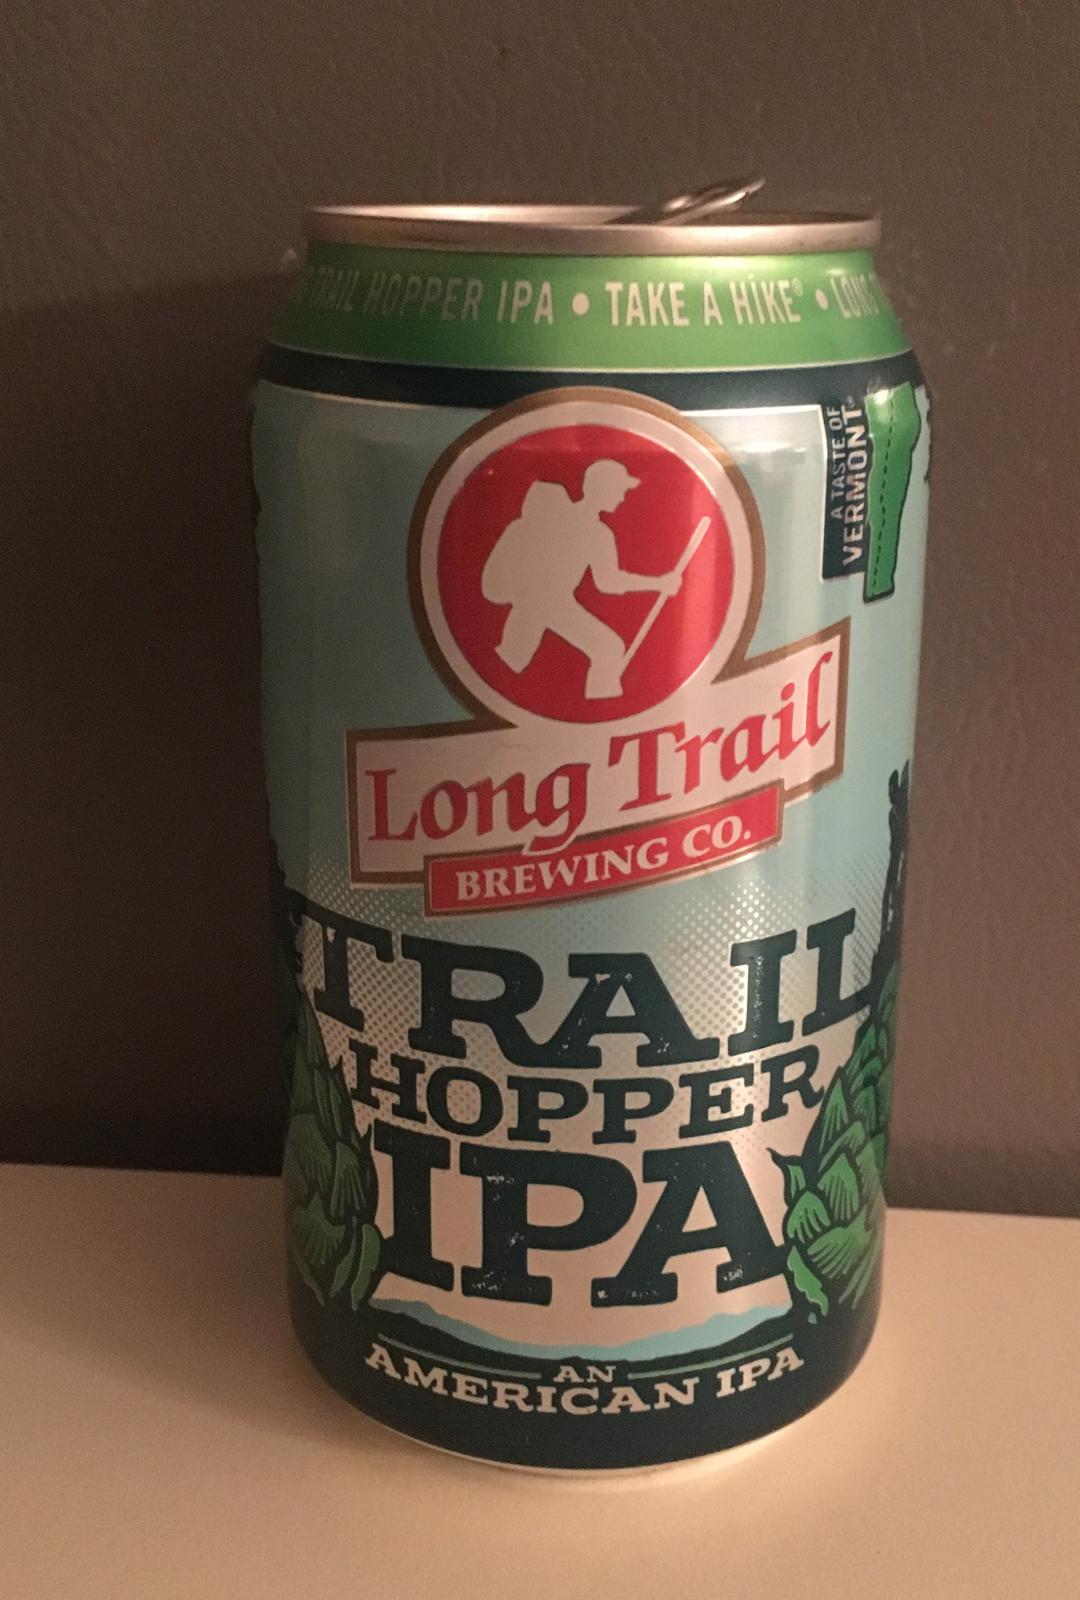 Trail Hopper IPA